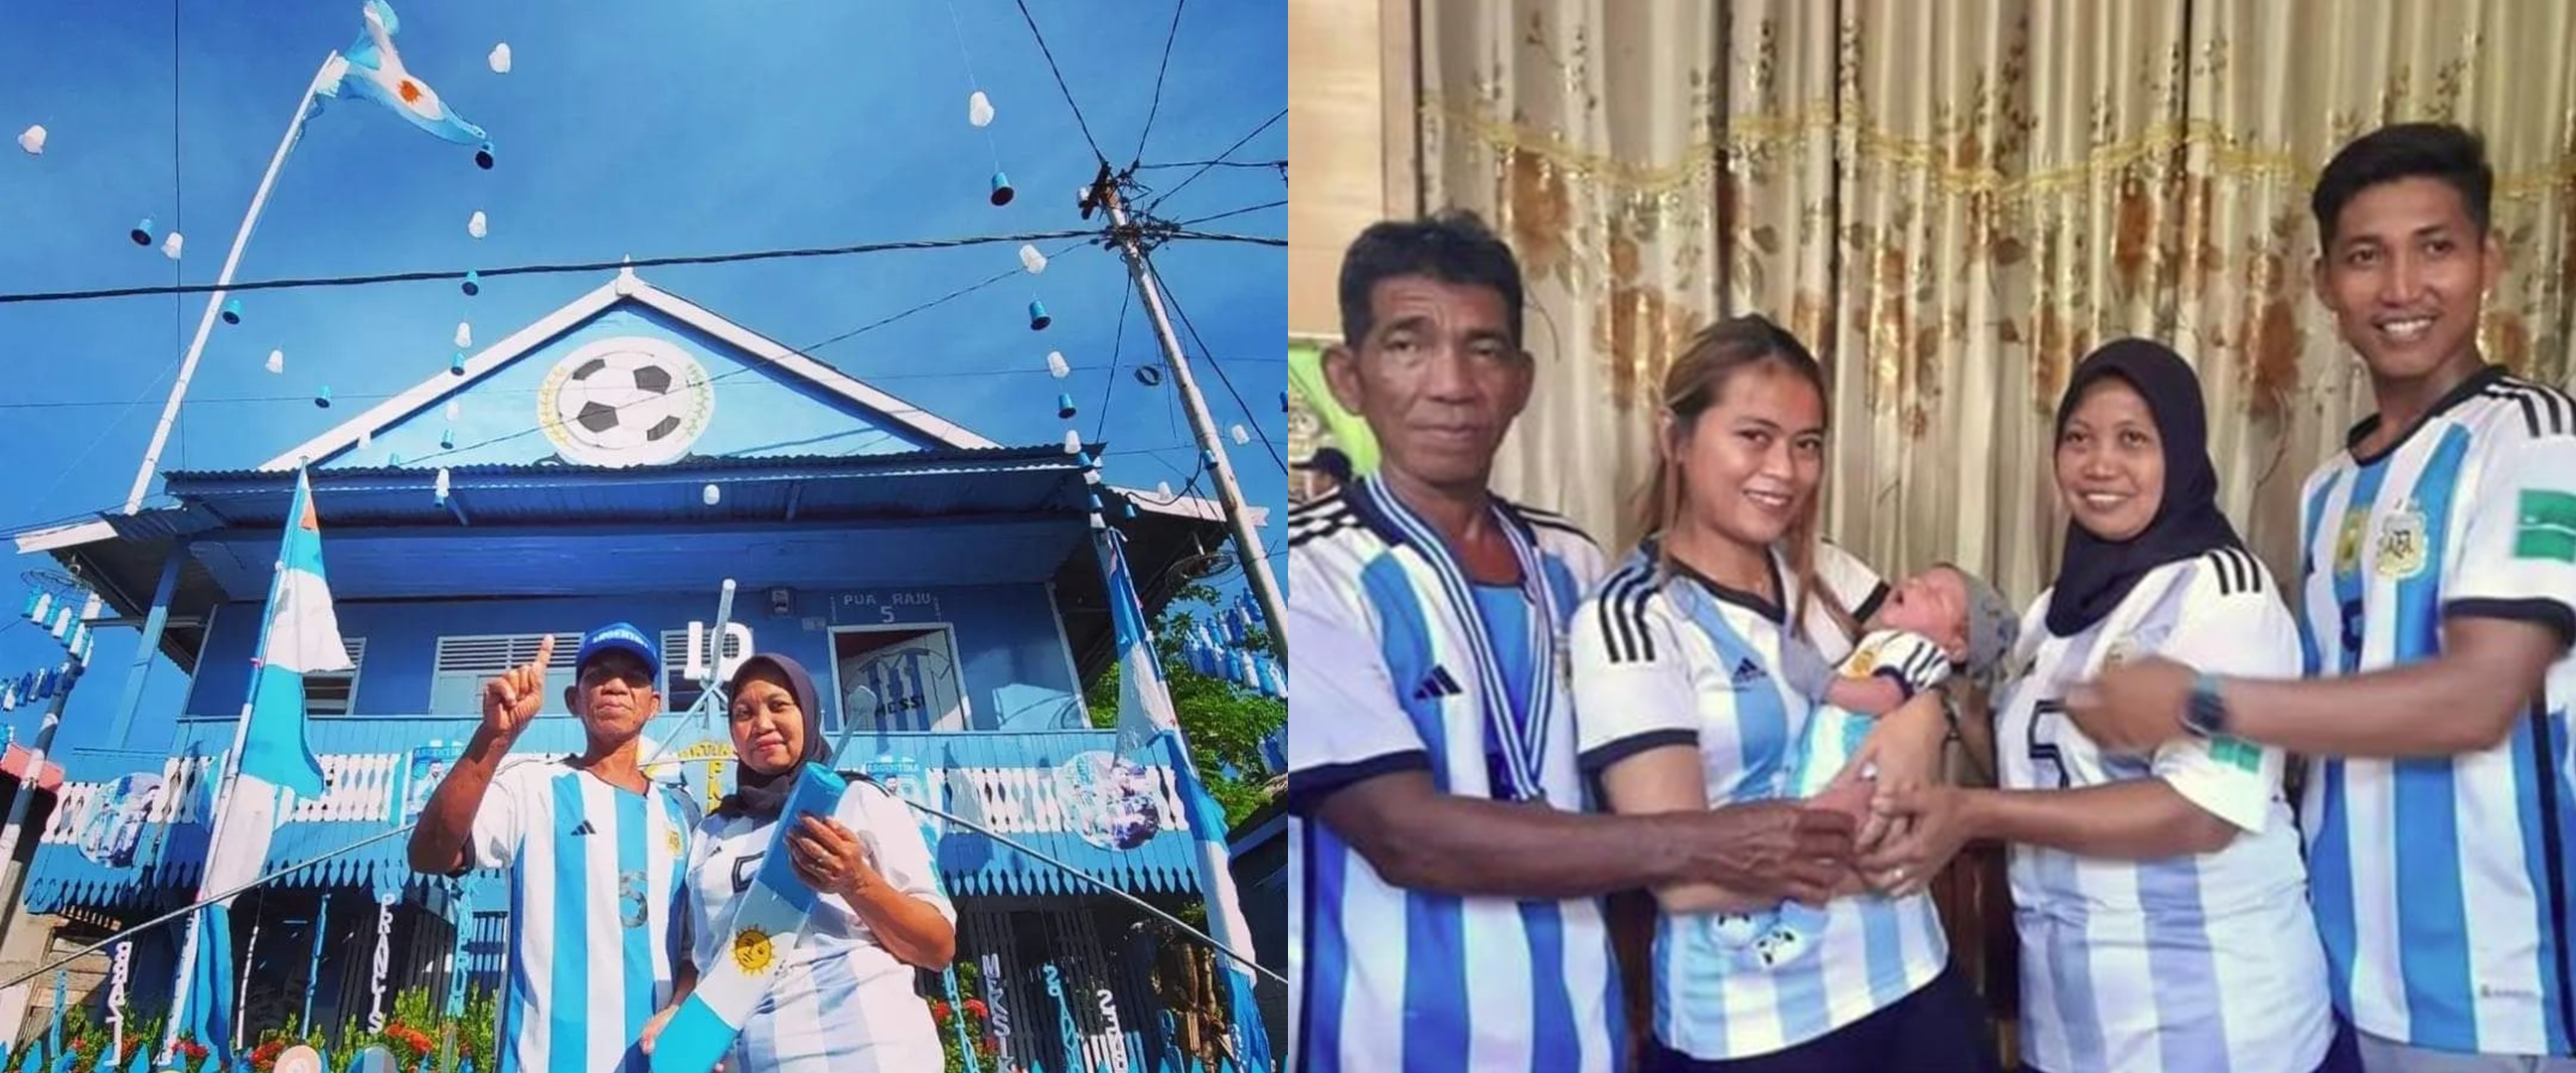 Fans Argentina ini beri nama cucunya Muhammad Messi, alasannya karena penuhi nazar